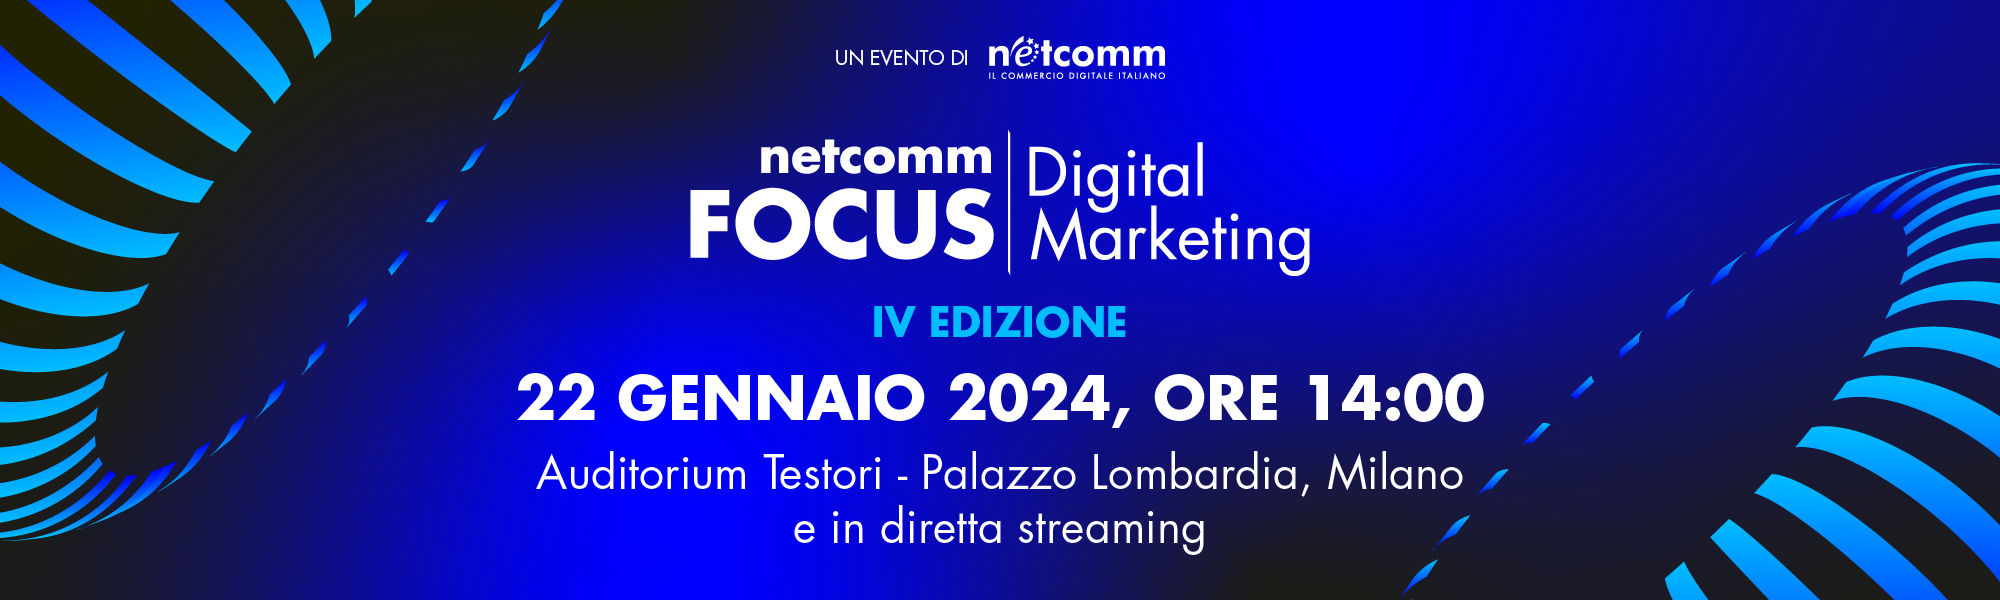 Netcomm FOCUS Digital Marketing 2024